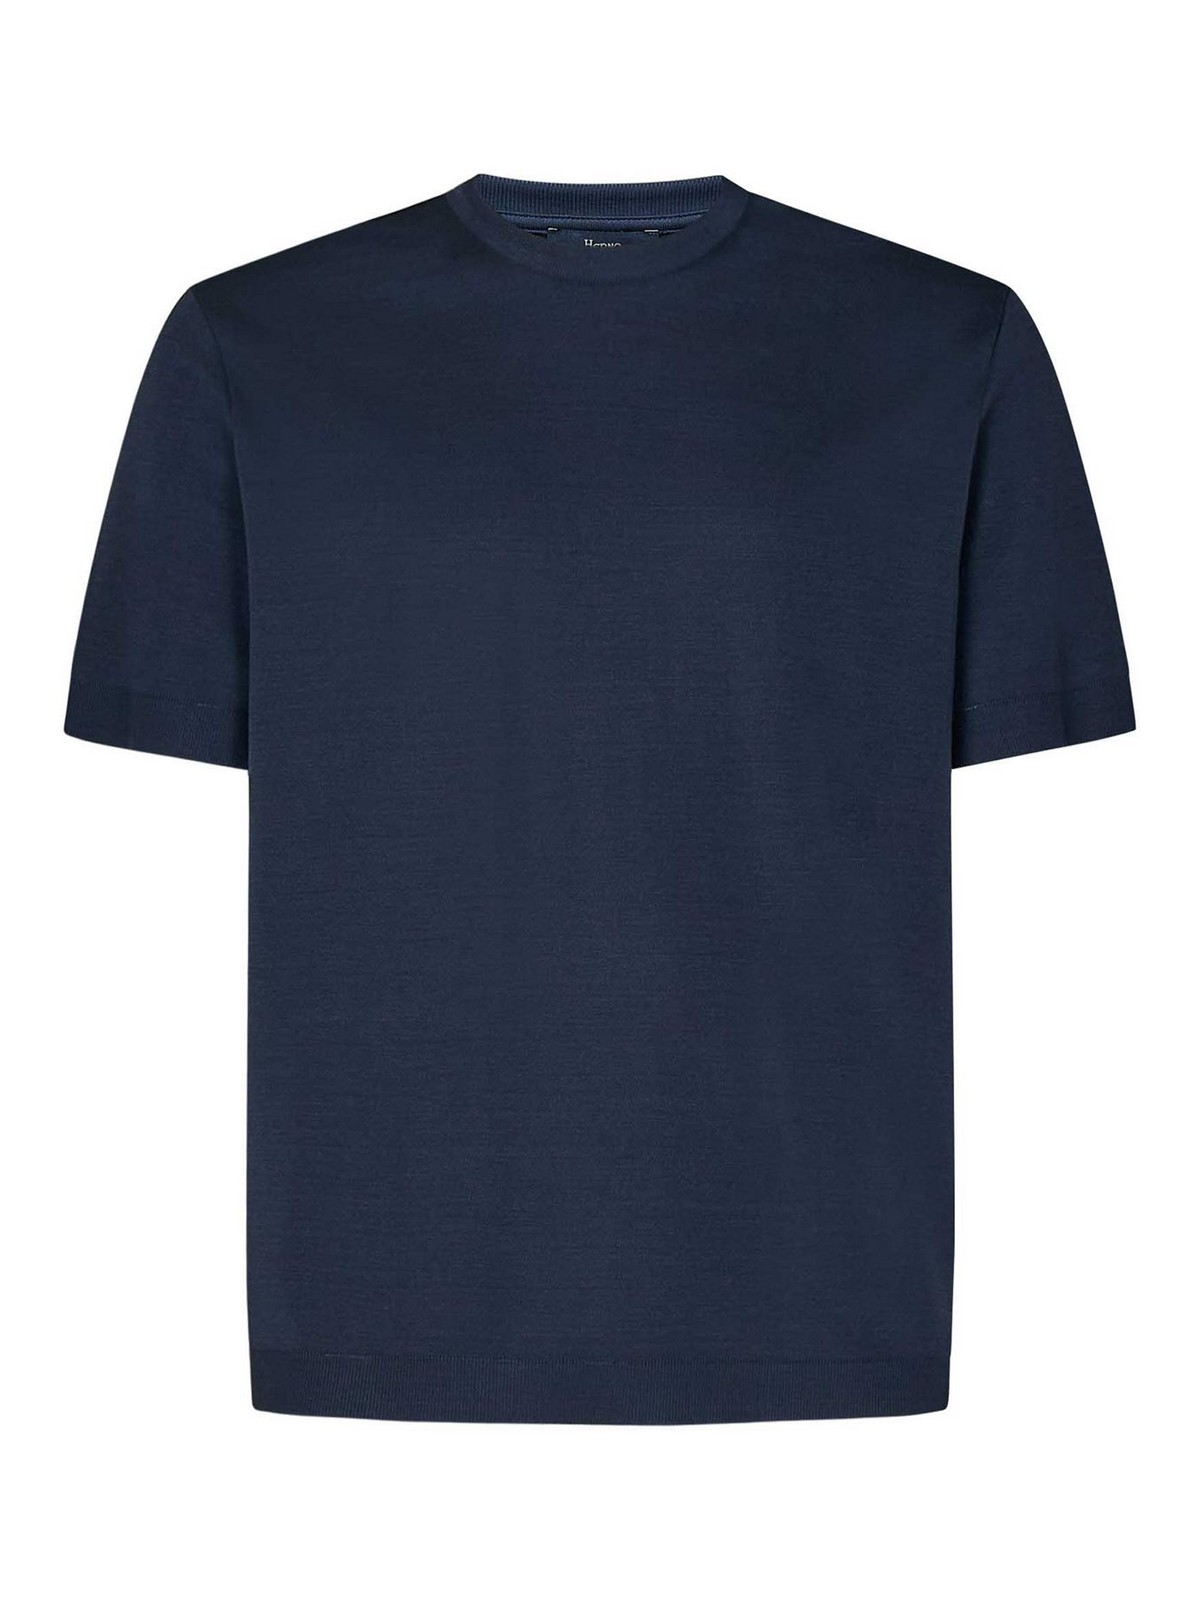 Herno Blue T-shirt In Plain Weave Cotton Piqu